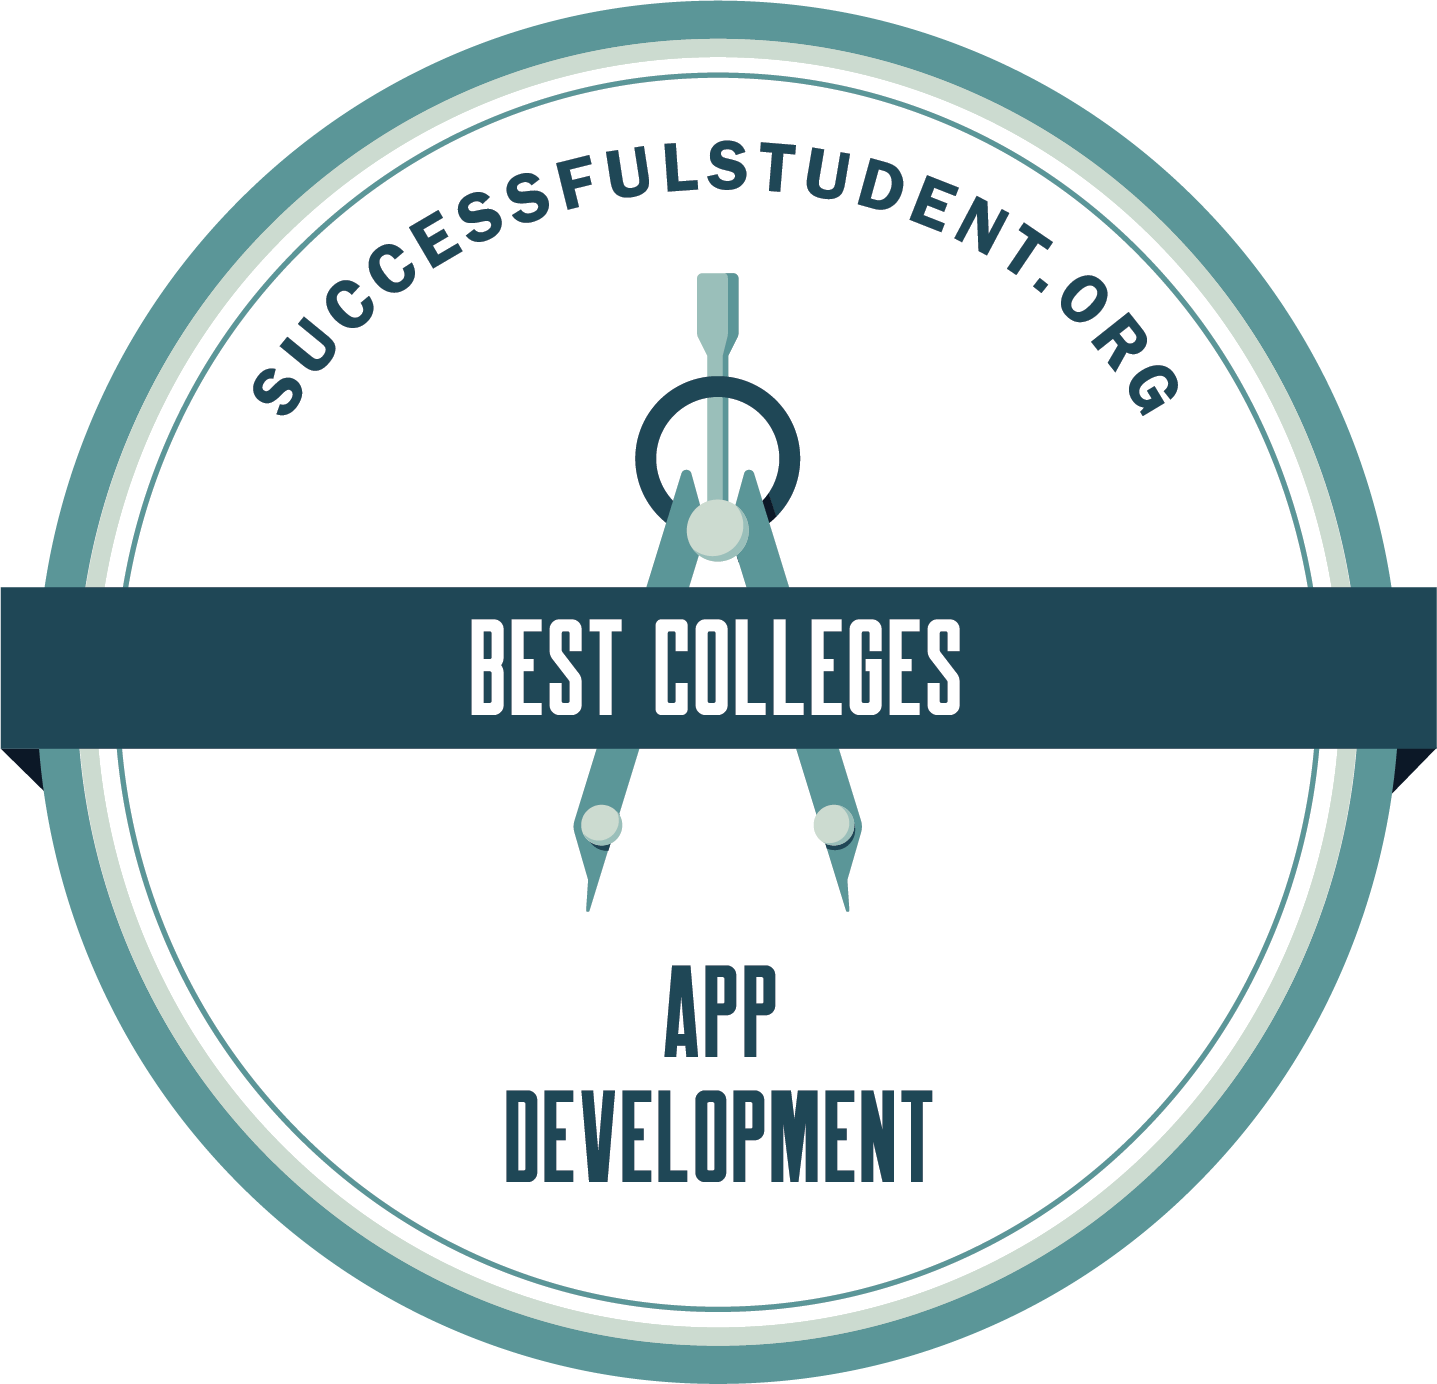 The Best App Development Colleges's Badge